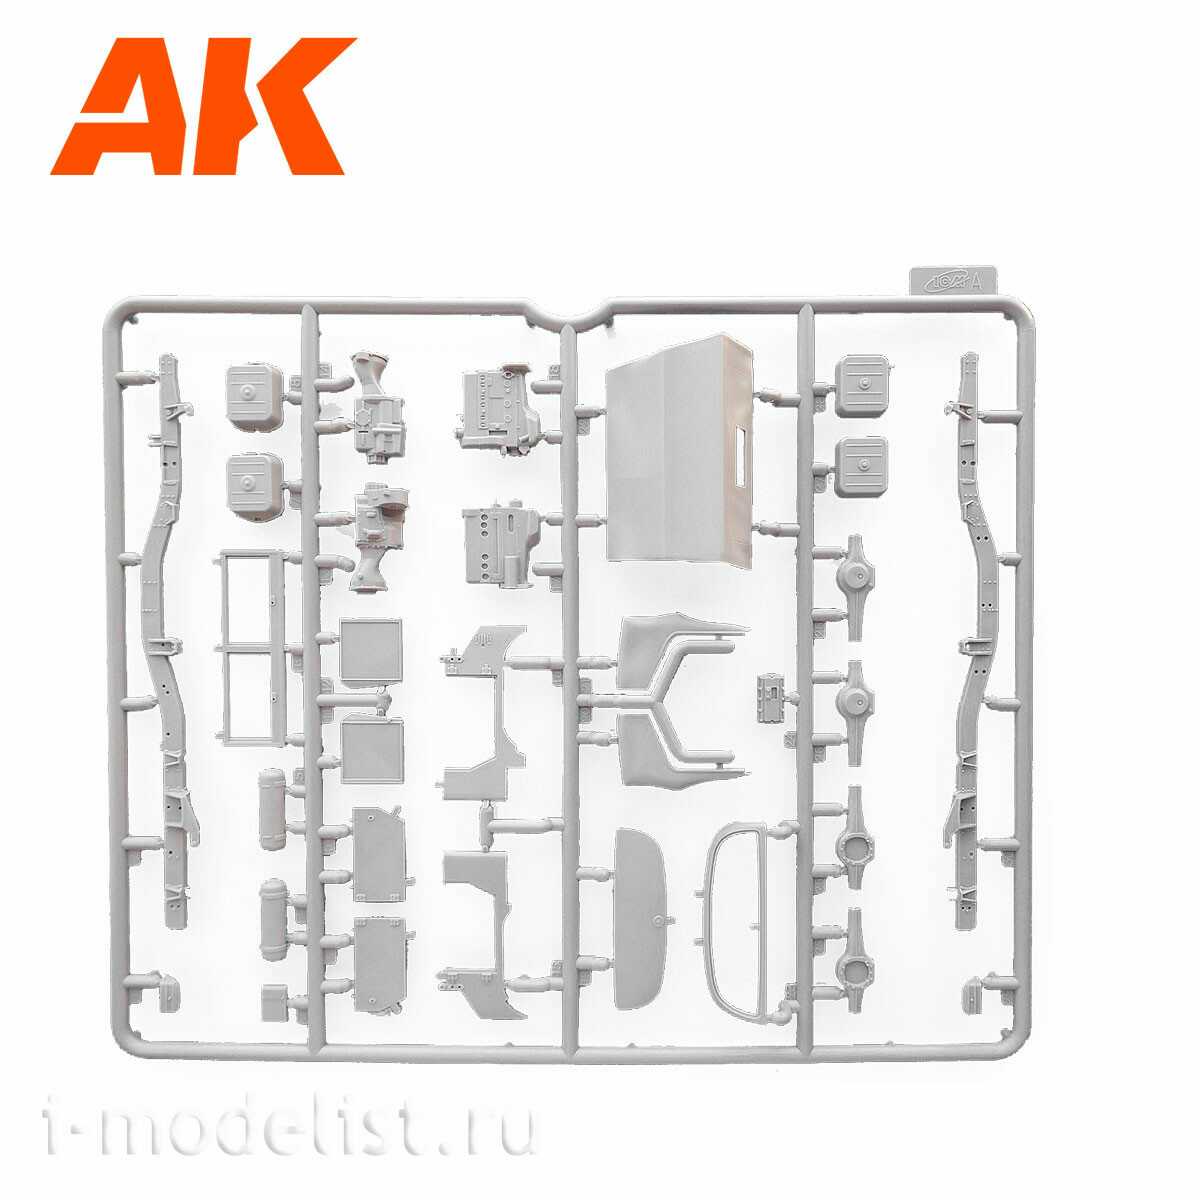 AK35506 AK Interactive 1/35 Внедорожник Unimog-S 404, Ближний Восток